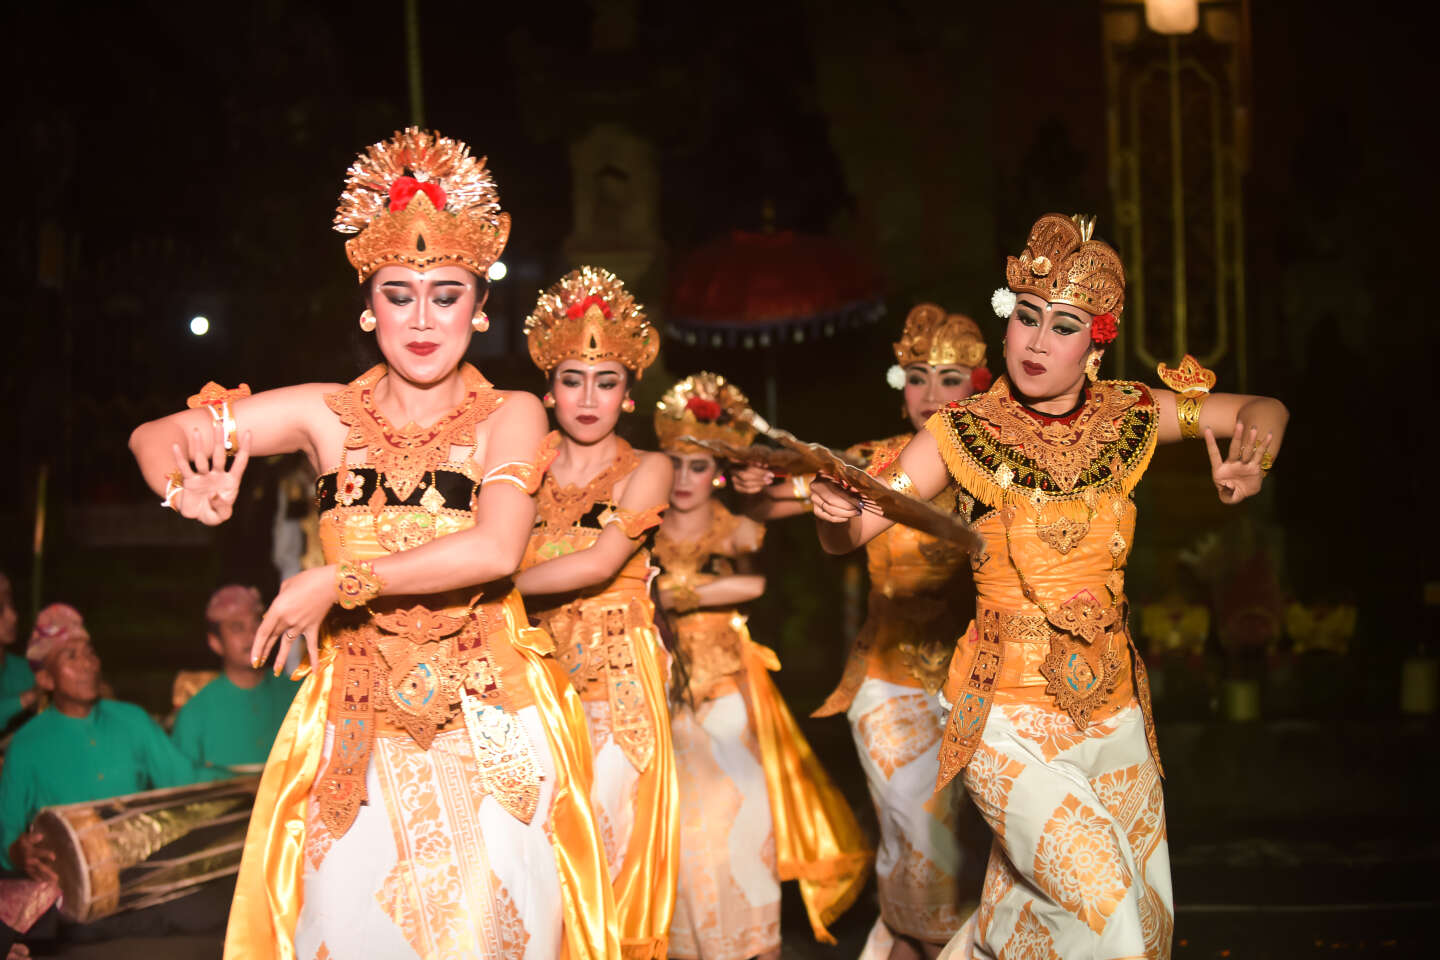 In Bali, the cosmic dance of gods and men